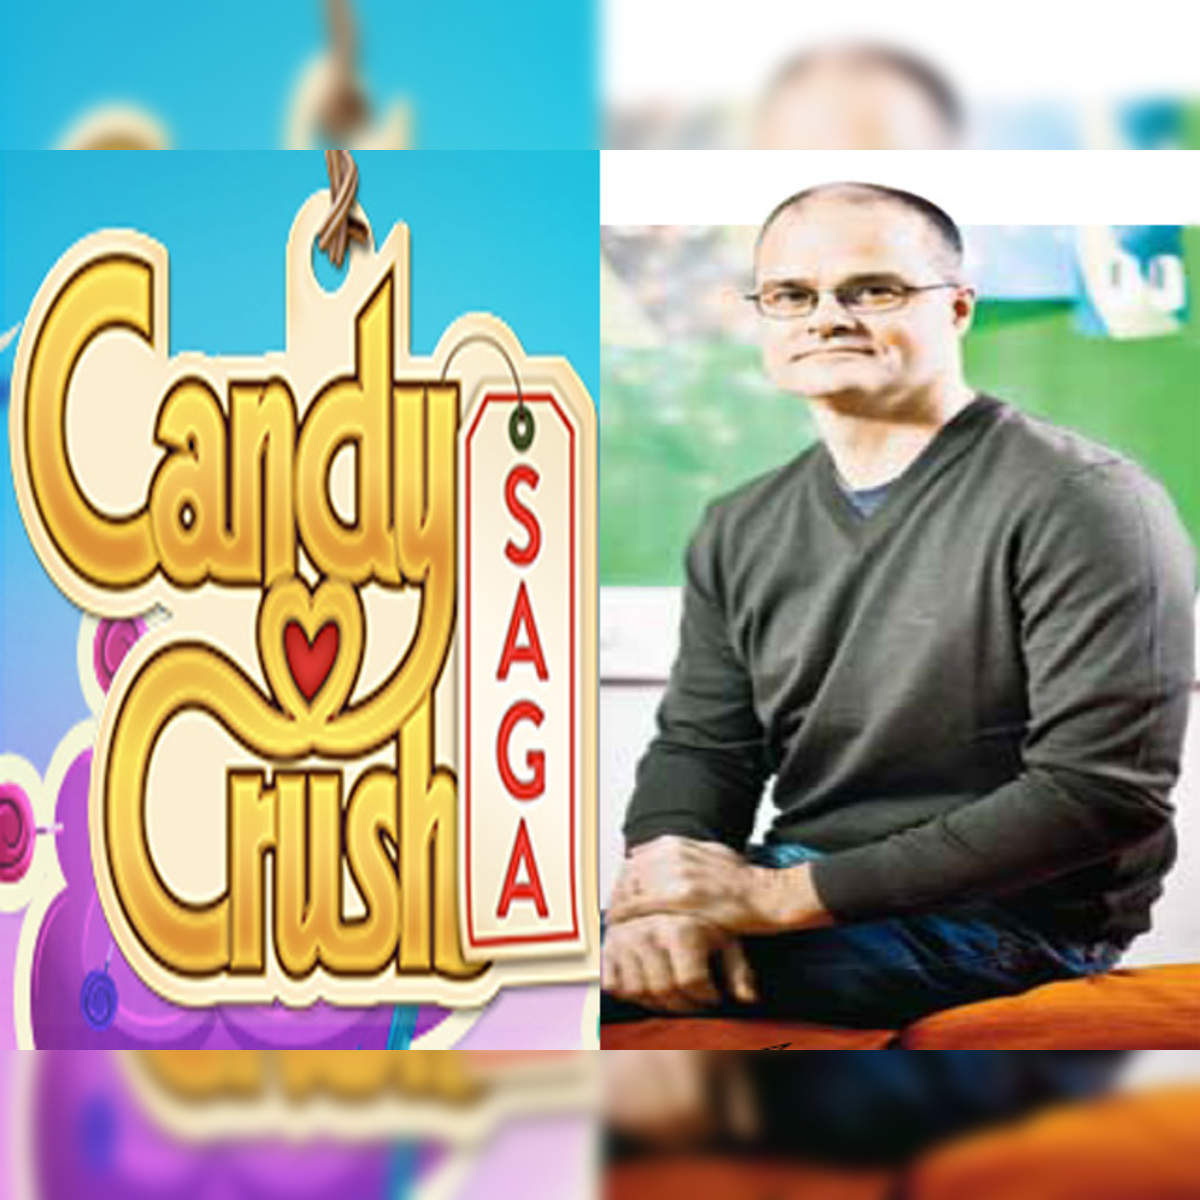 Candy Crush Saga (Video Game 2012) - Connections - IMDb